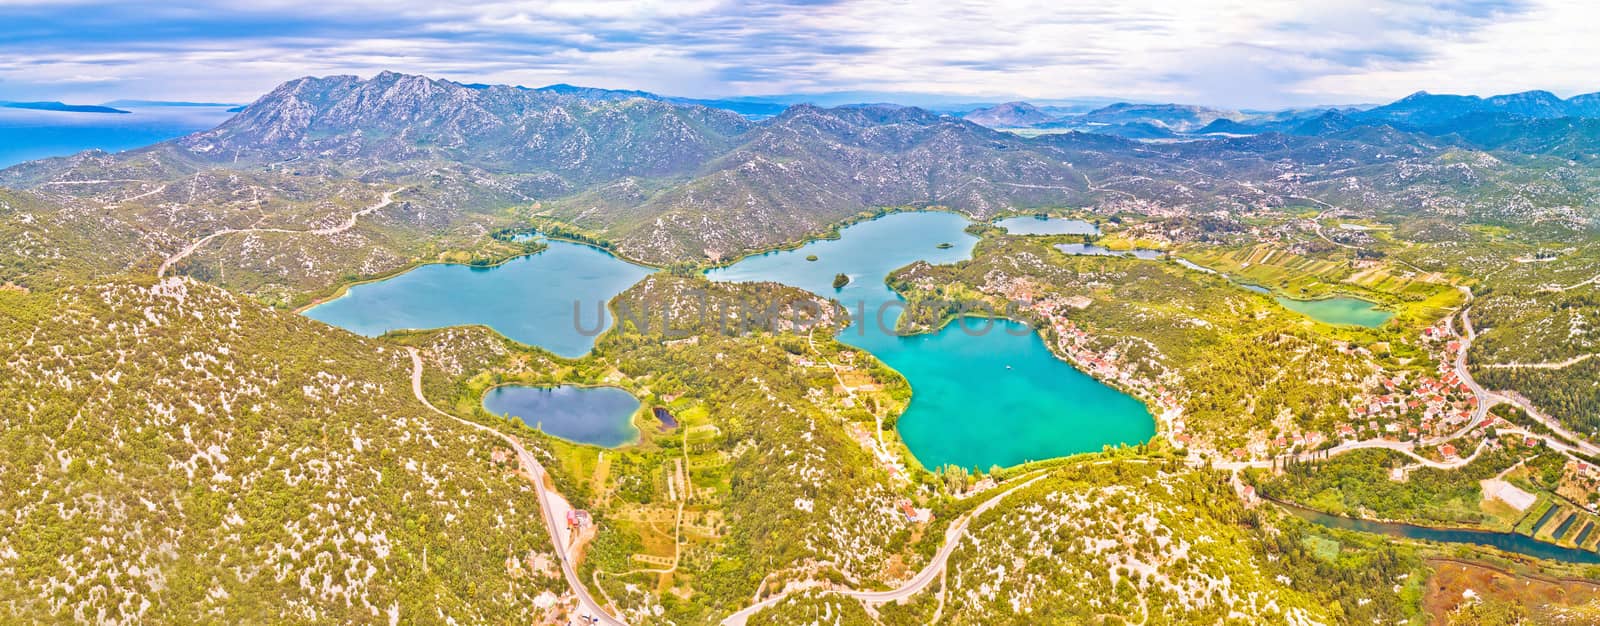 Bacina lakes landscape aerial panoramic view, southern Dalmatia region of Croatia